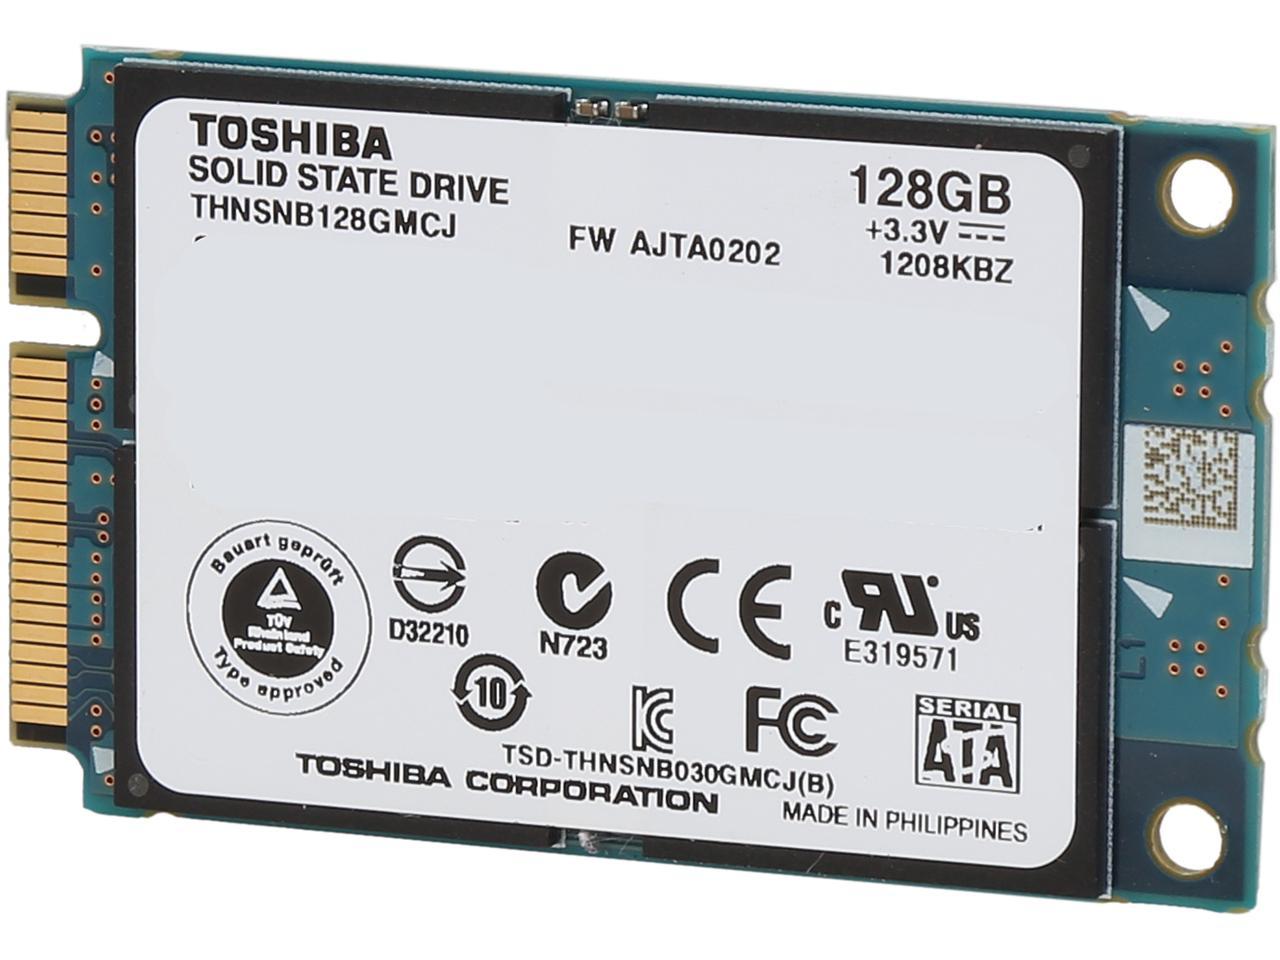 Ssd 128 купить. MSATA SSD 128gb. Toshiba 128 ГБ thnsnj128g8nu. Toshiba Solid State Drive 128gb. Toshiba 128 ГБ SATA thnsnj128gcsy.